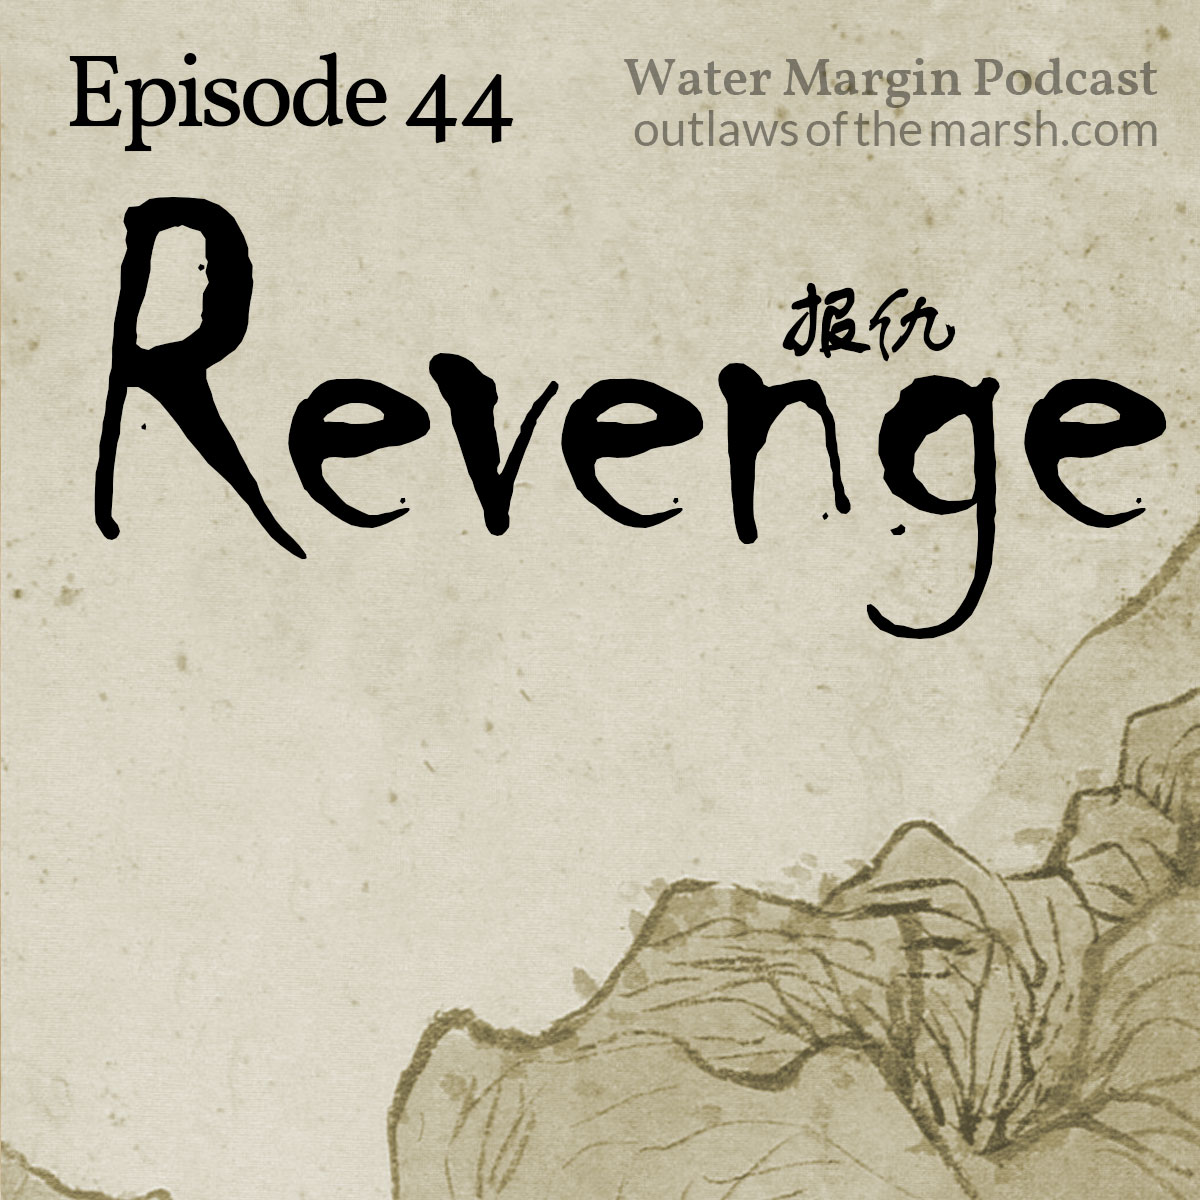 Water Margin Podcast: Episode 044